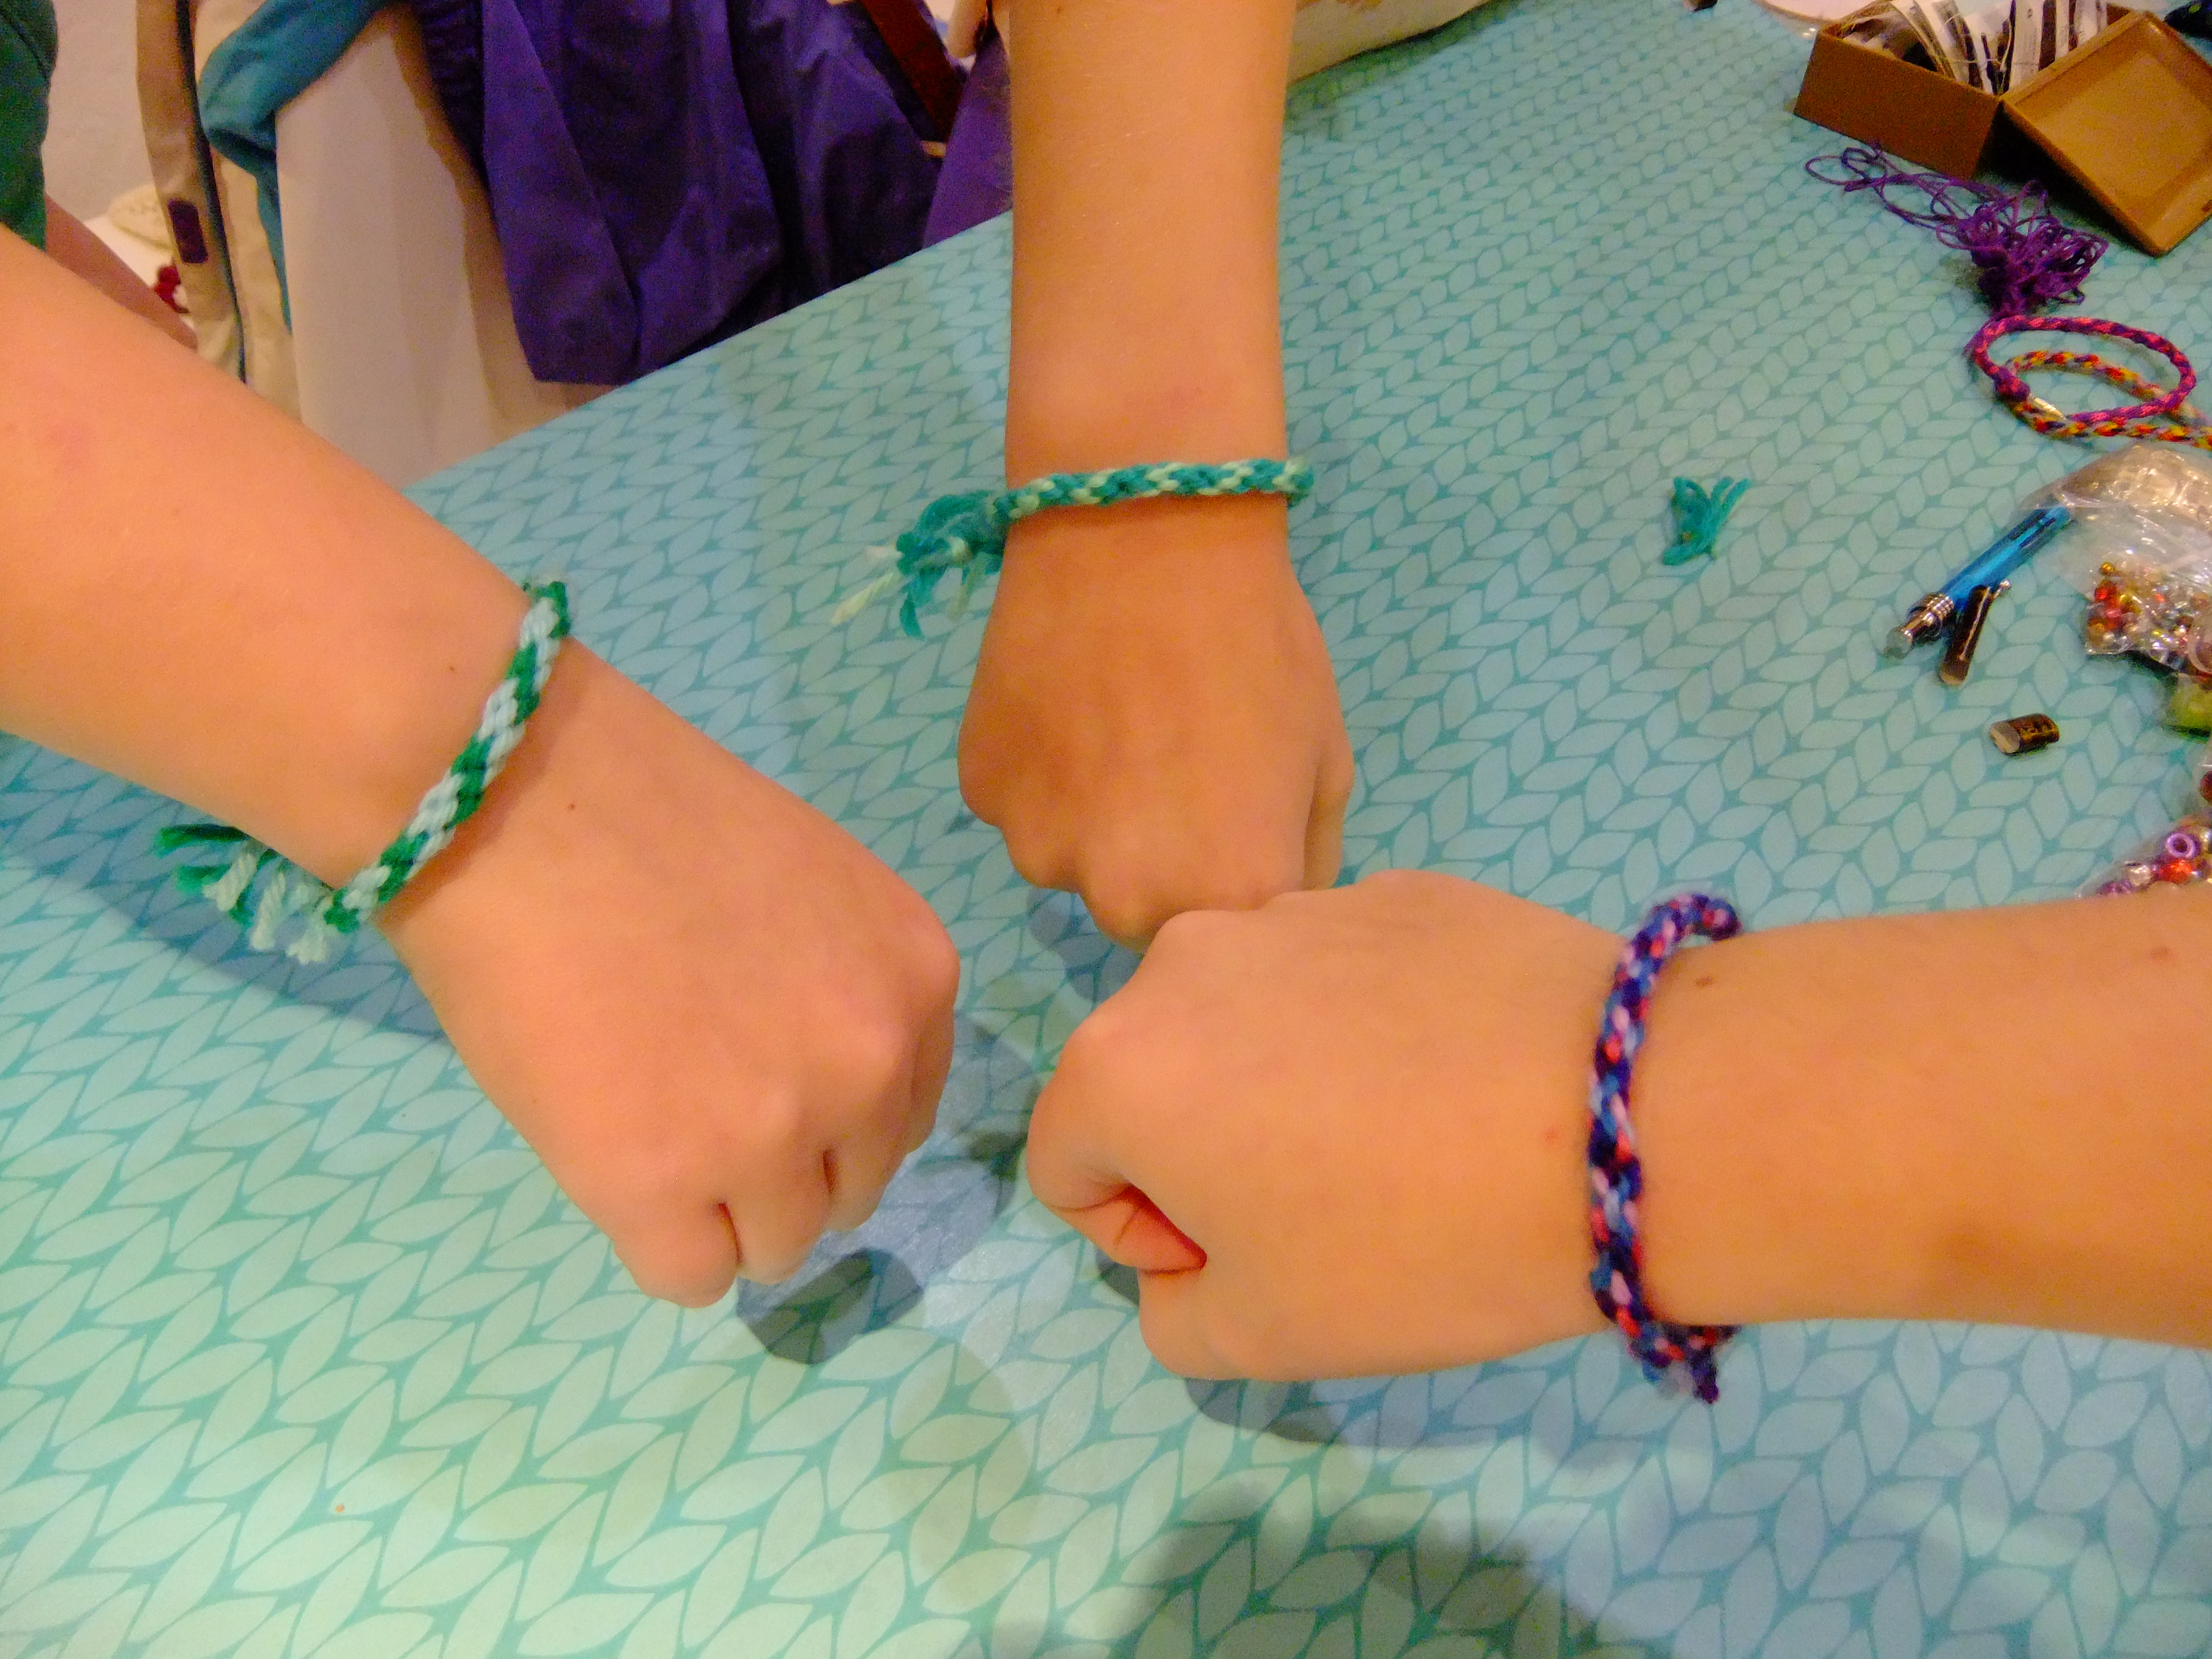 Workshops & Courses with Debbie Tomkies - Friendship bracelets and braiding